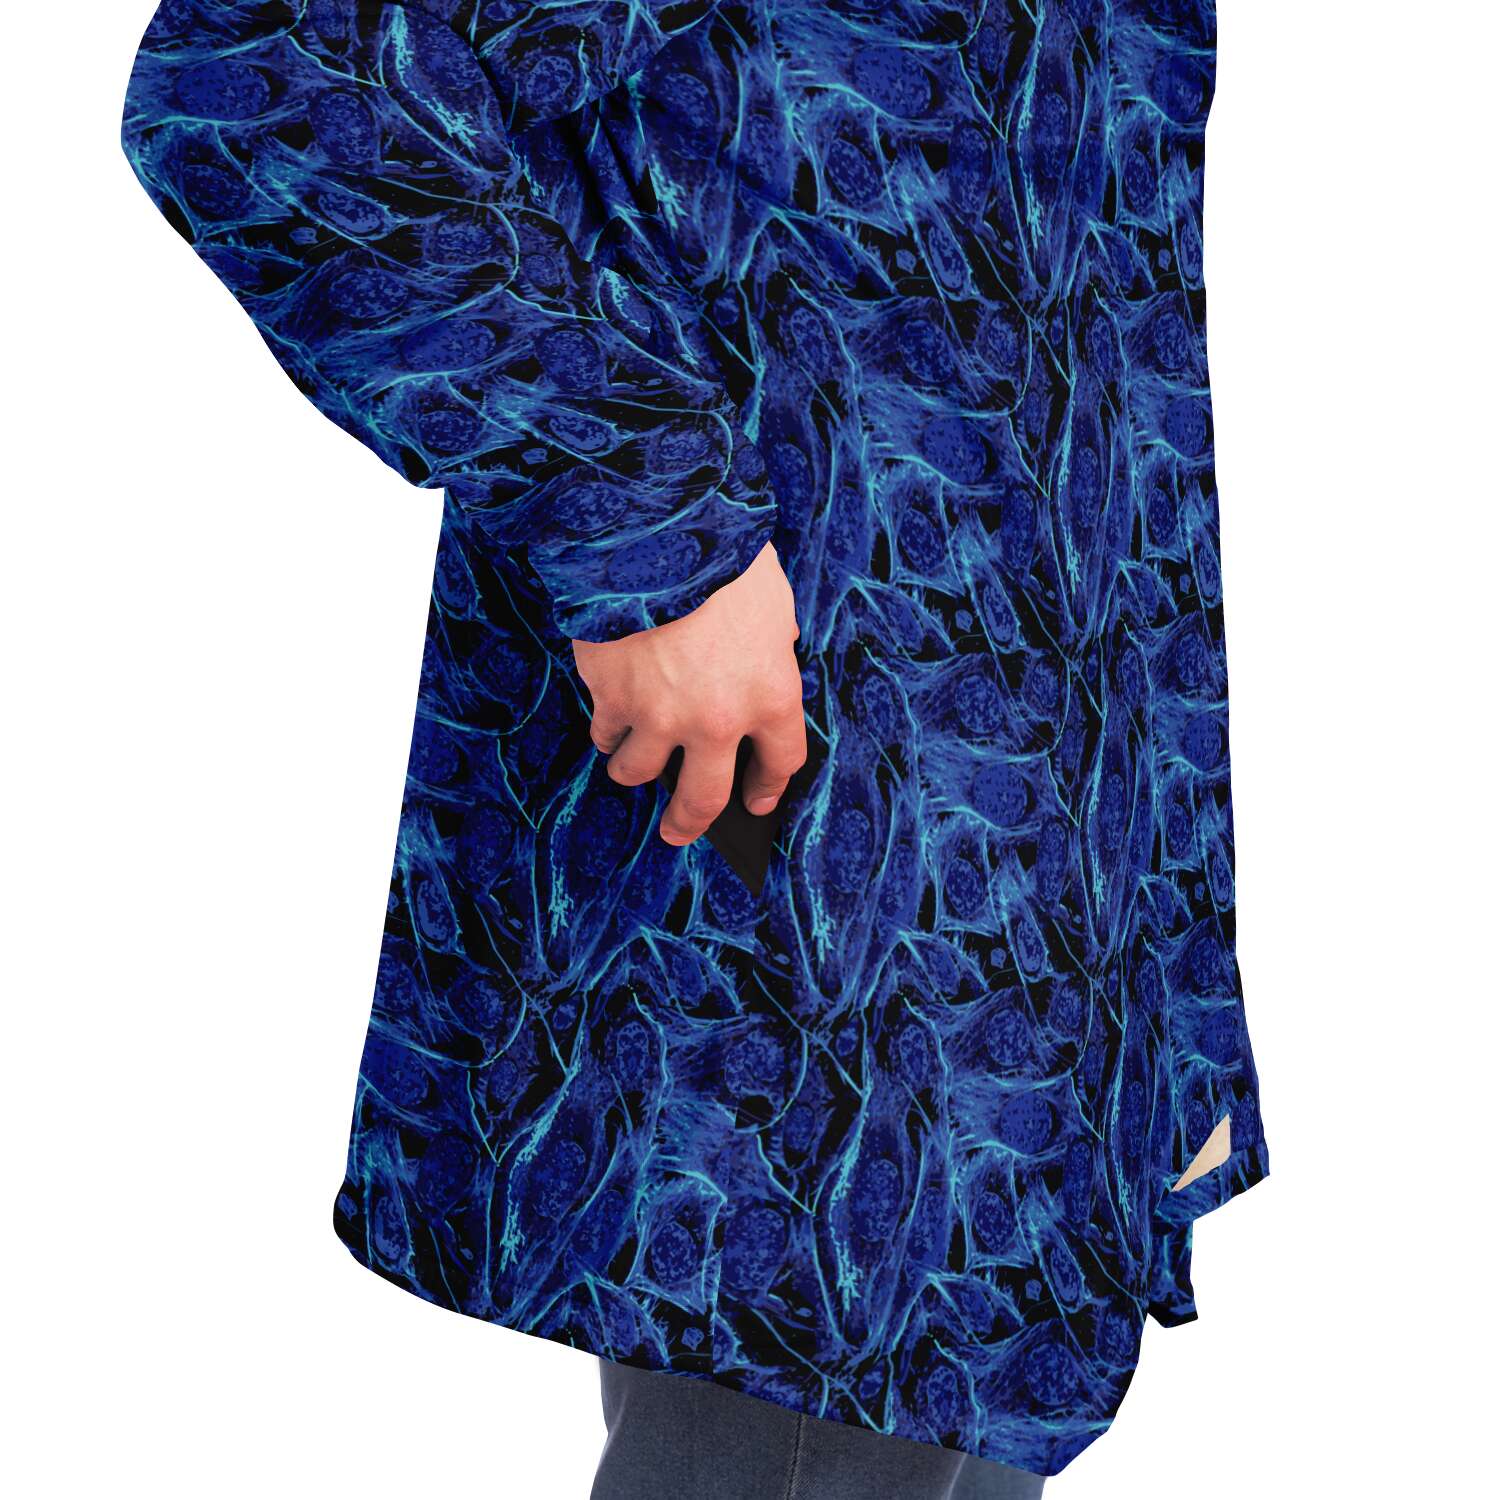 Blue Lighting Hooded Cloak with Pockets - Custom Sewn